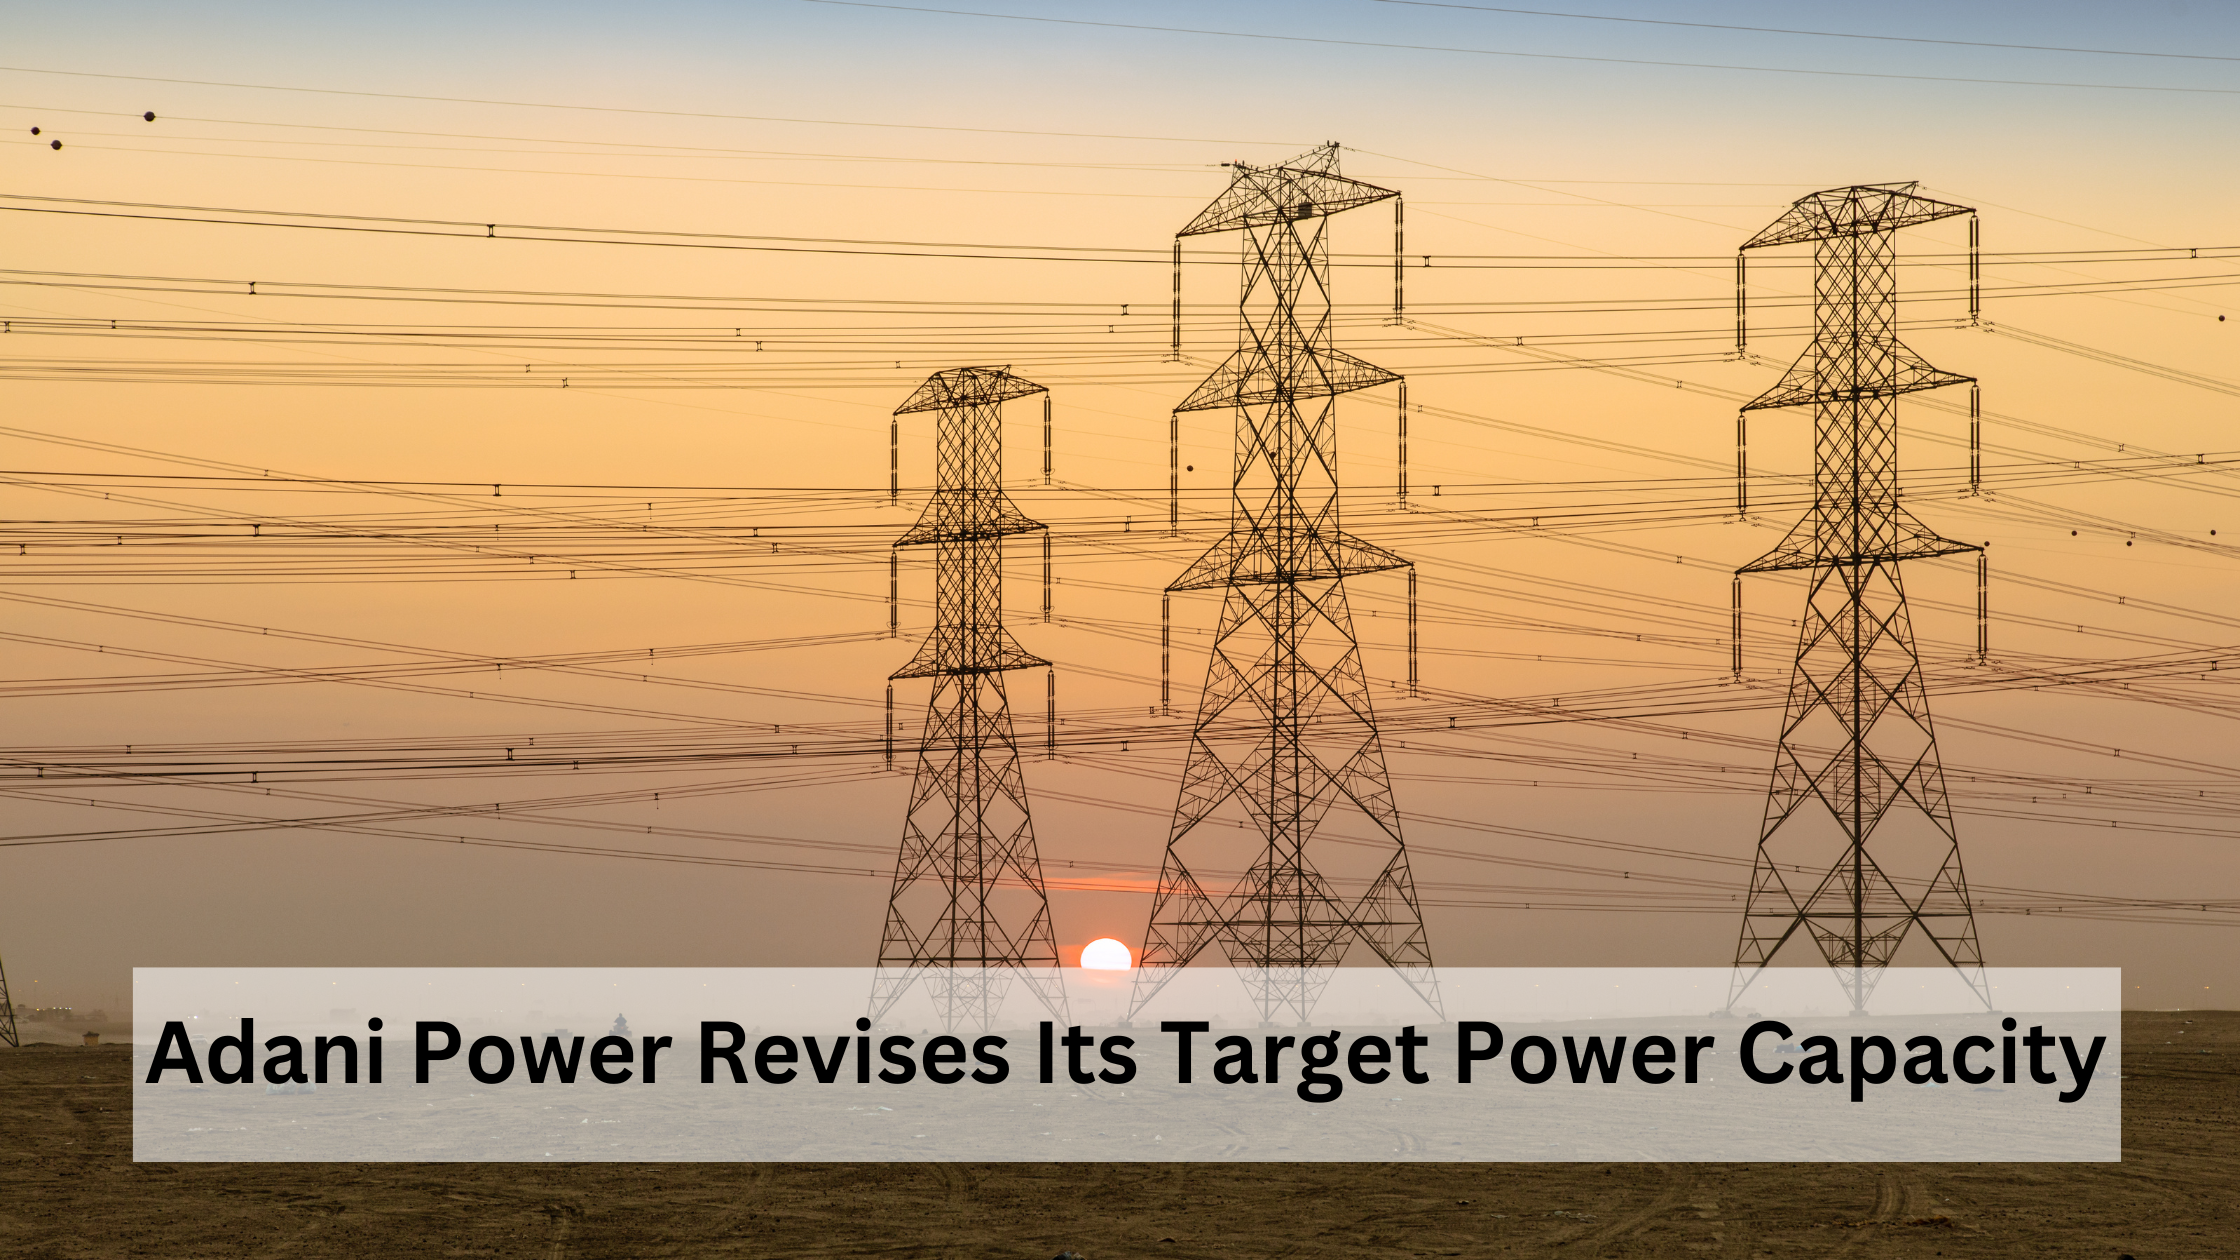 Adani Power Revises Its Target Power Capacity